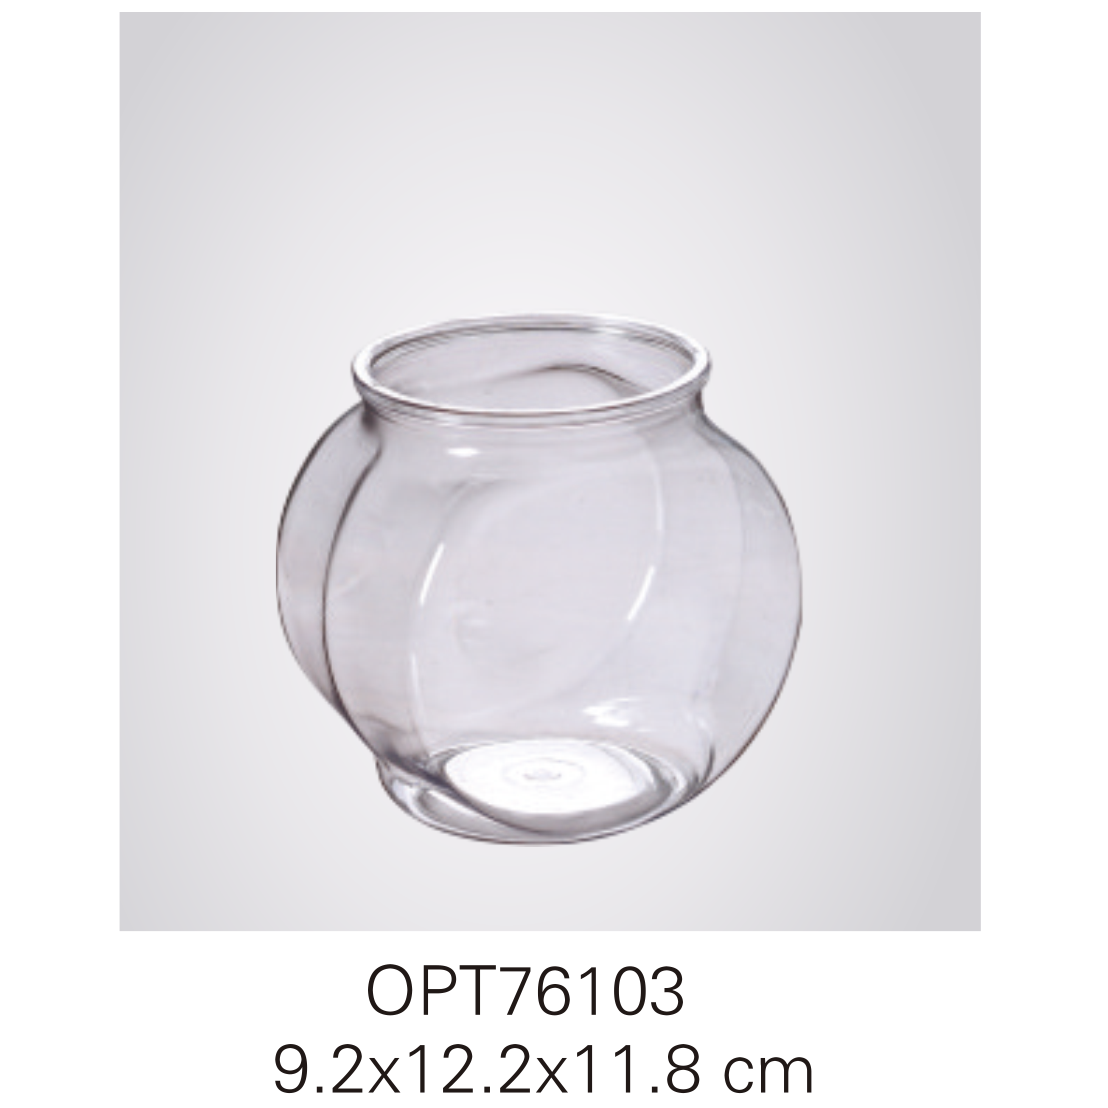 OPT76103 9.2x12.2x11.8cm fishbowls